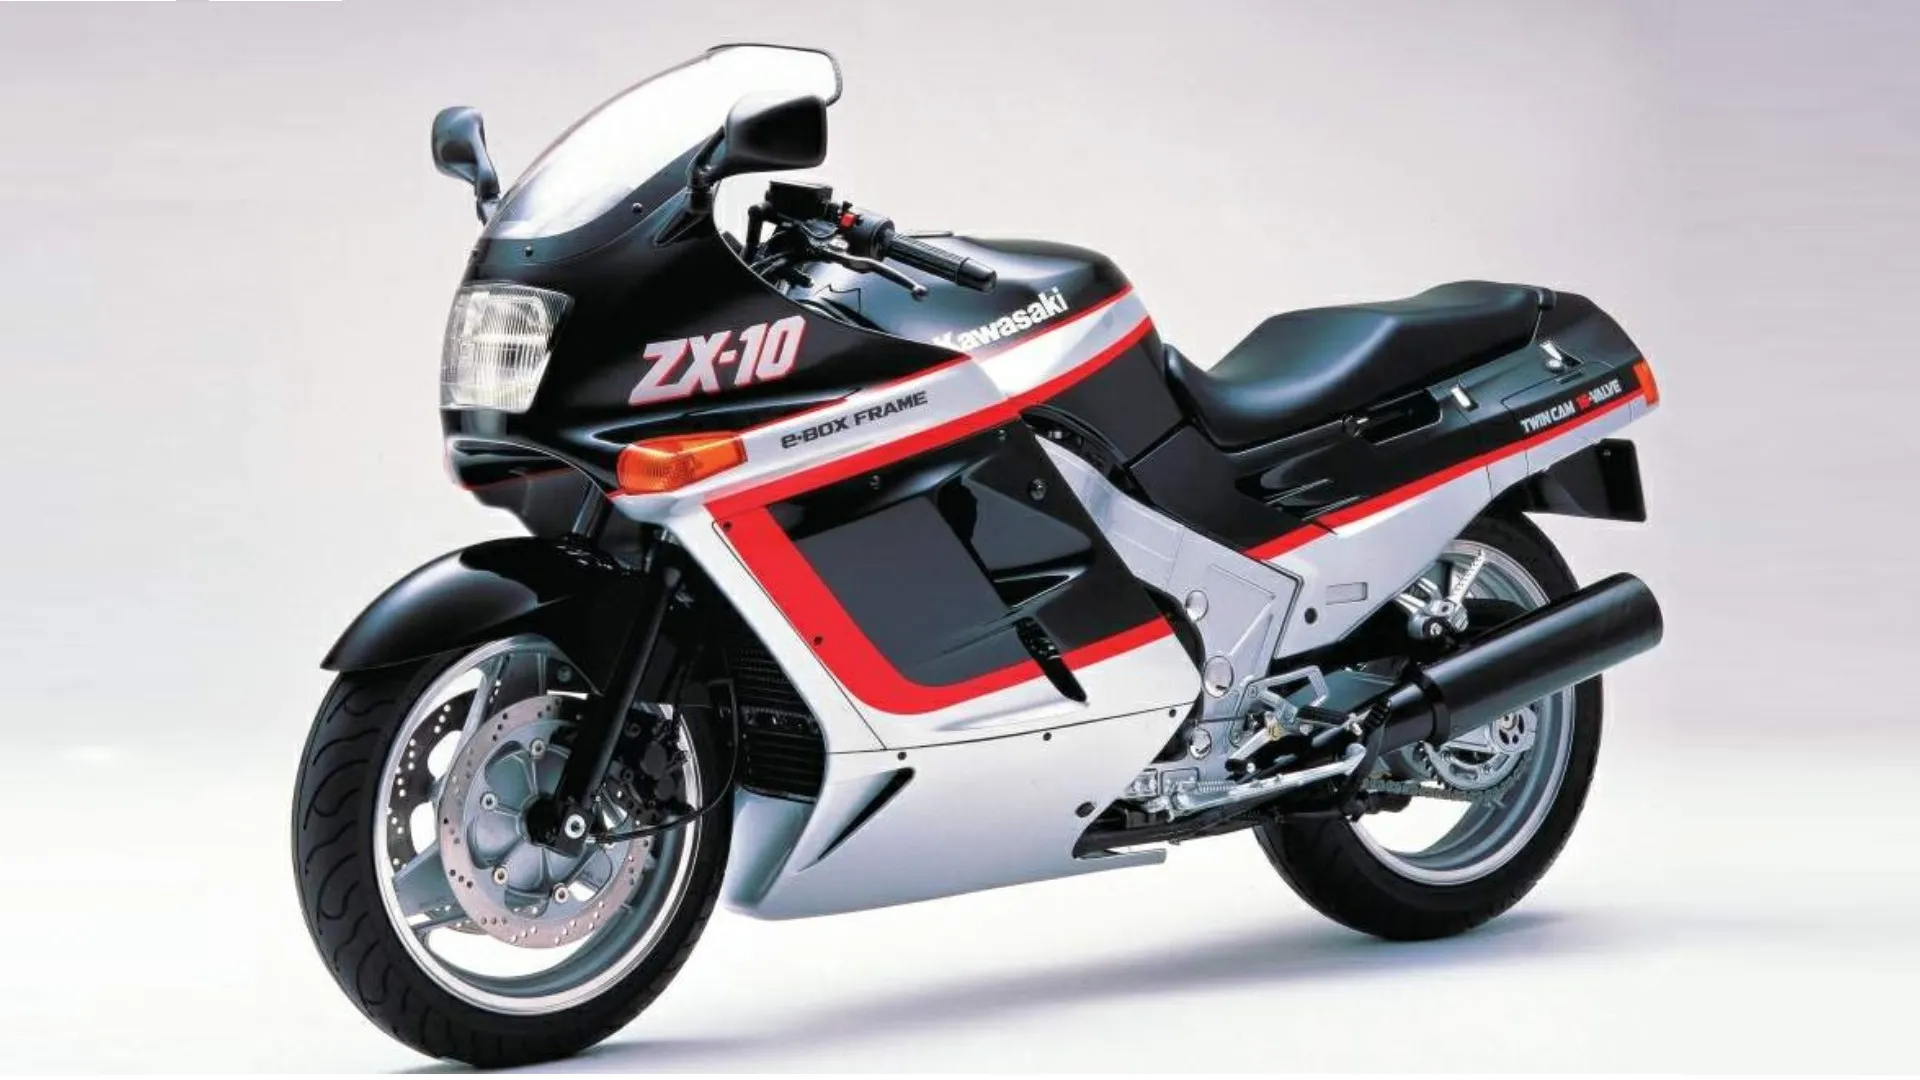 Moto del día: Kawasaki ZX-10 Tomcat